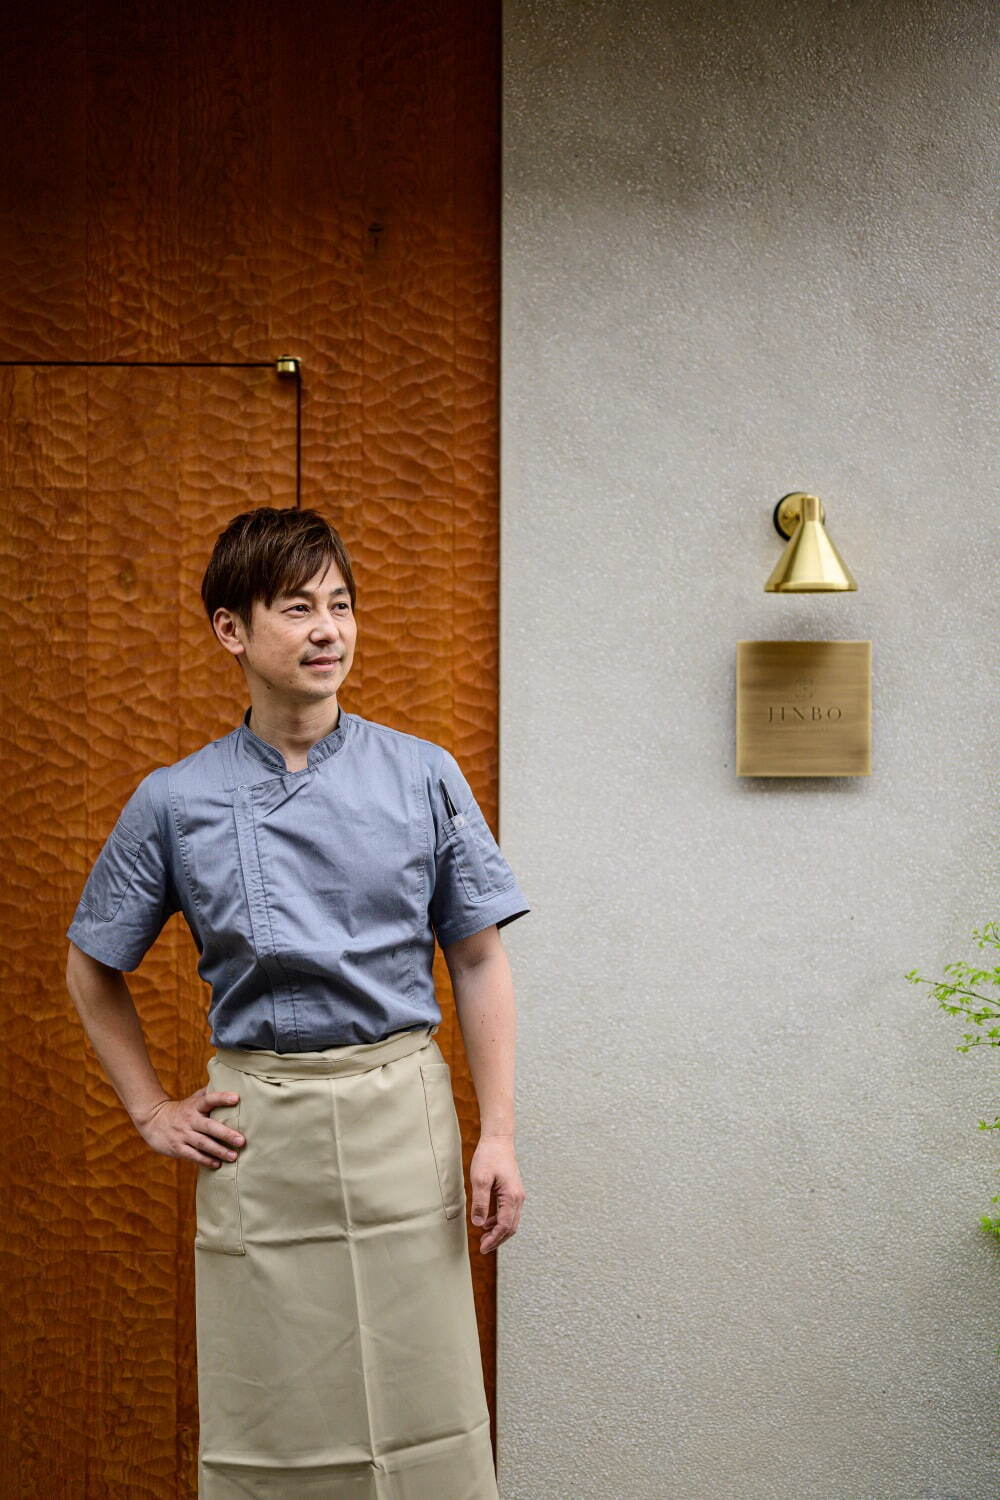 Chef Yoshinaga Jinbo at Jinbo Minami Aoyama